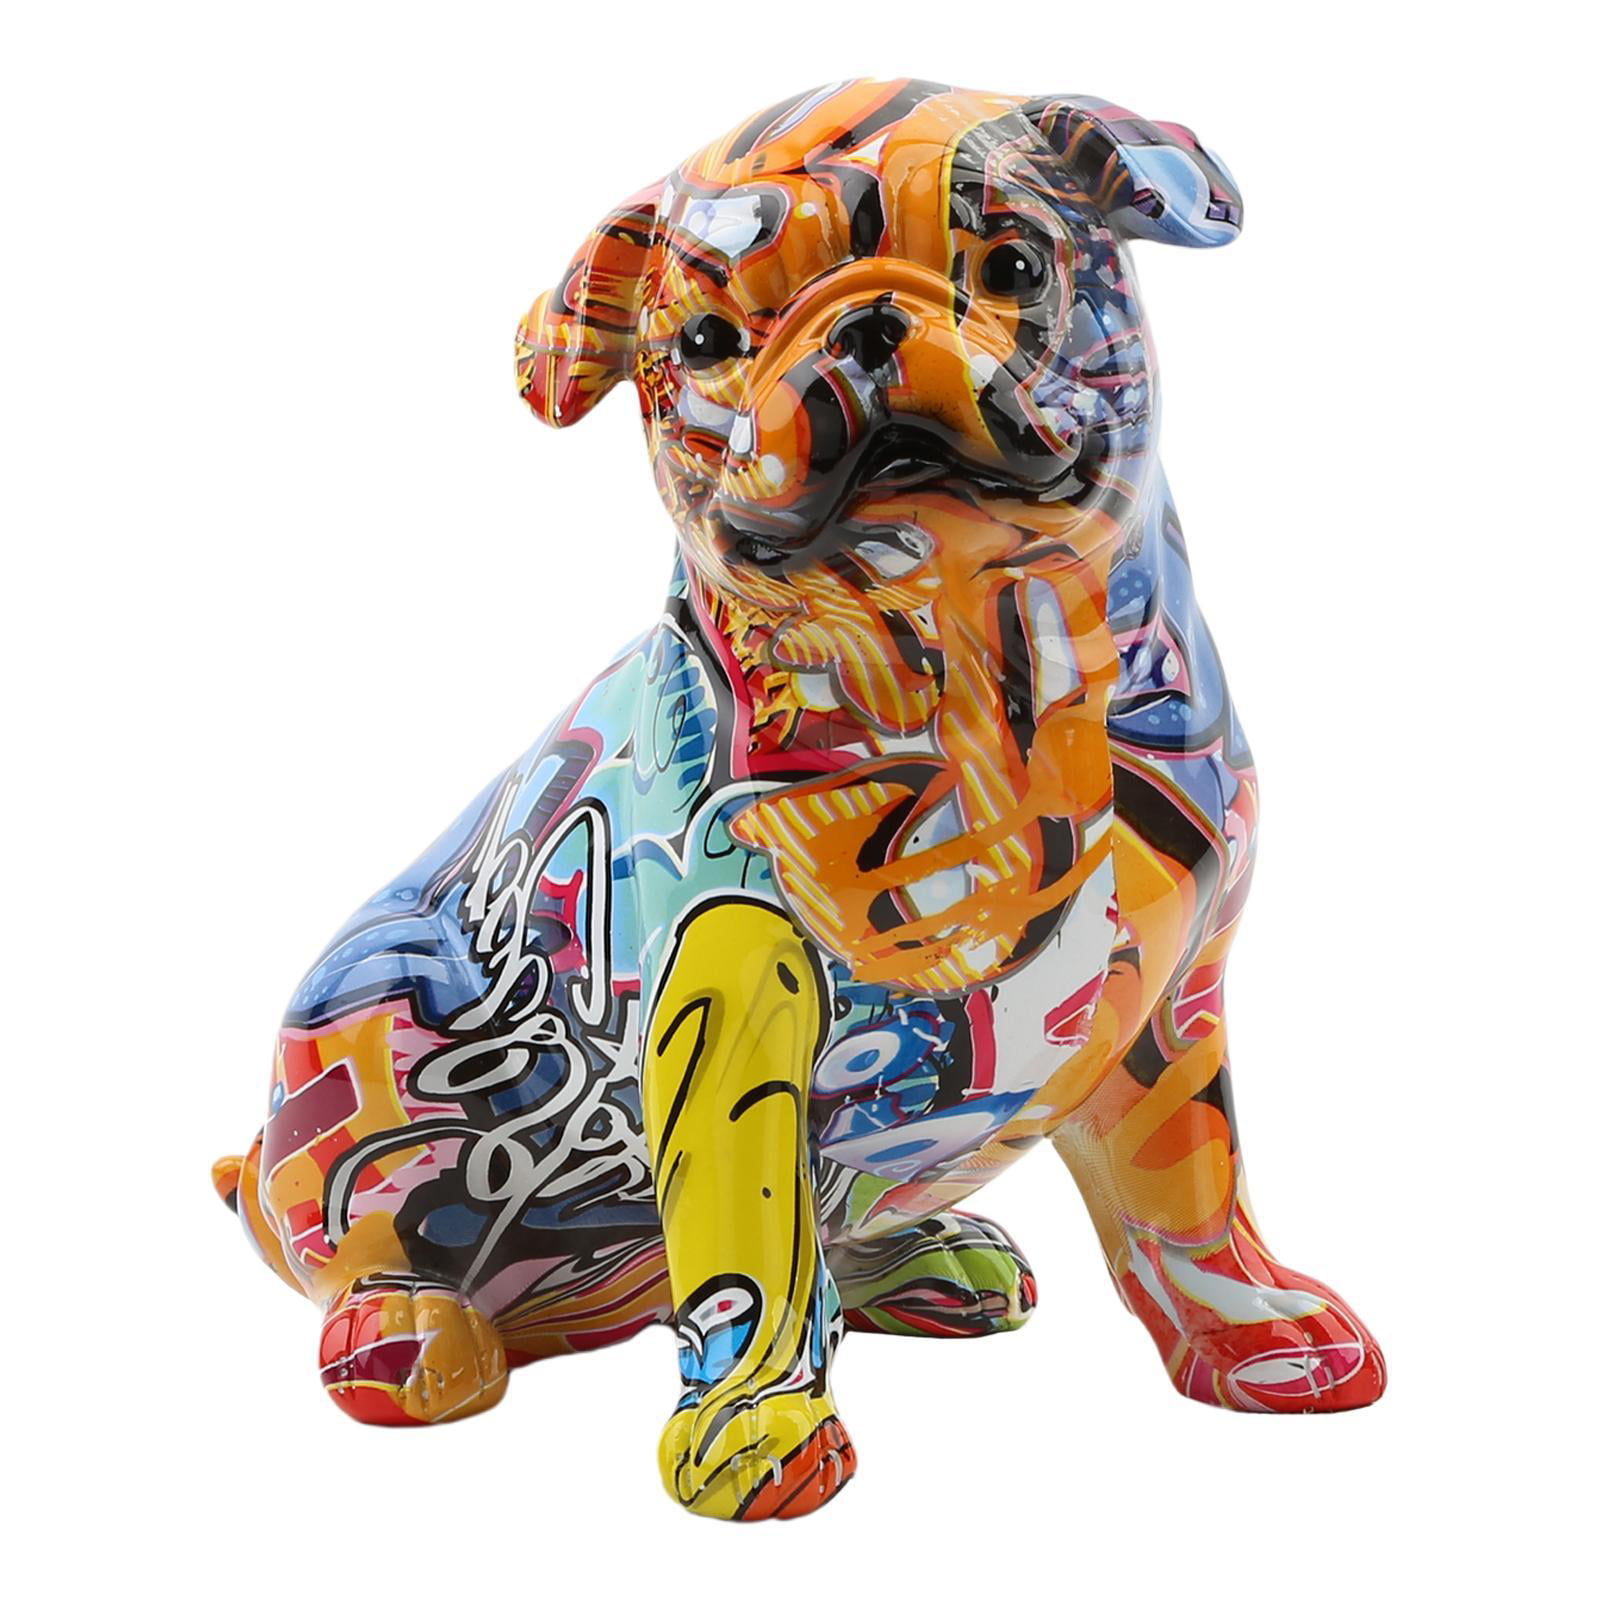 Nordic Bulldog Sculpture Figurine Graffiti Dog Statue Animals Art Decoration 